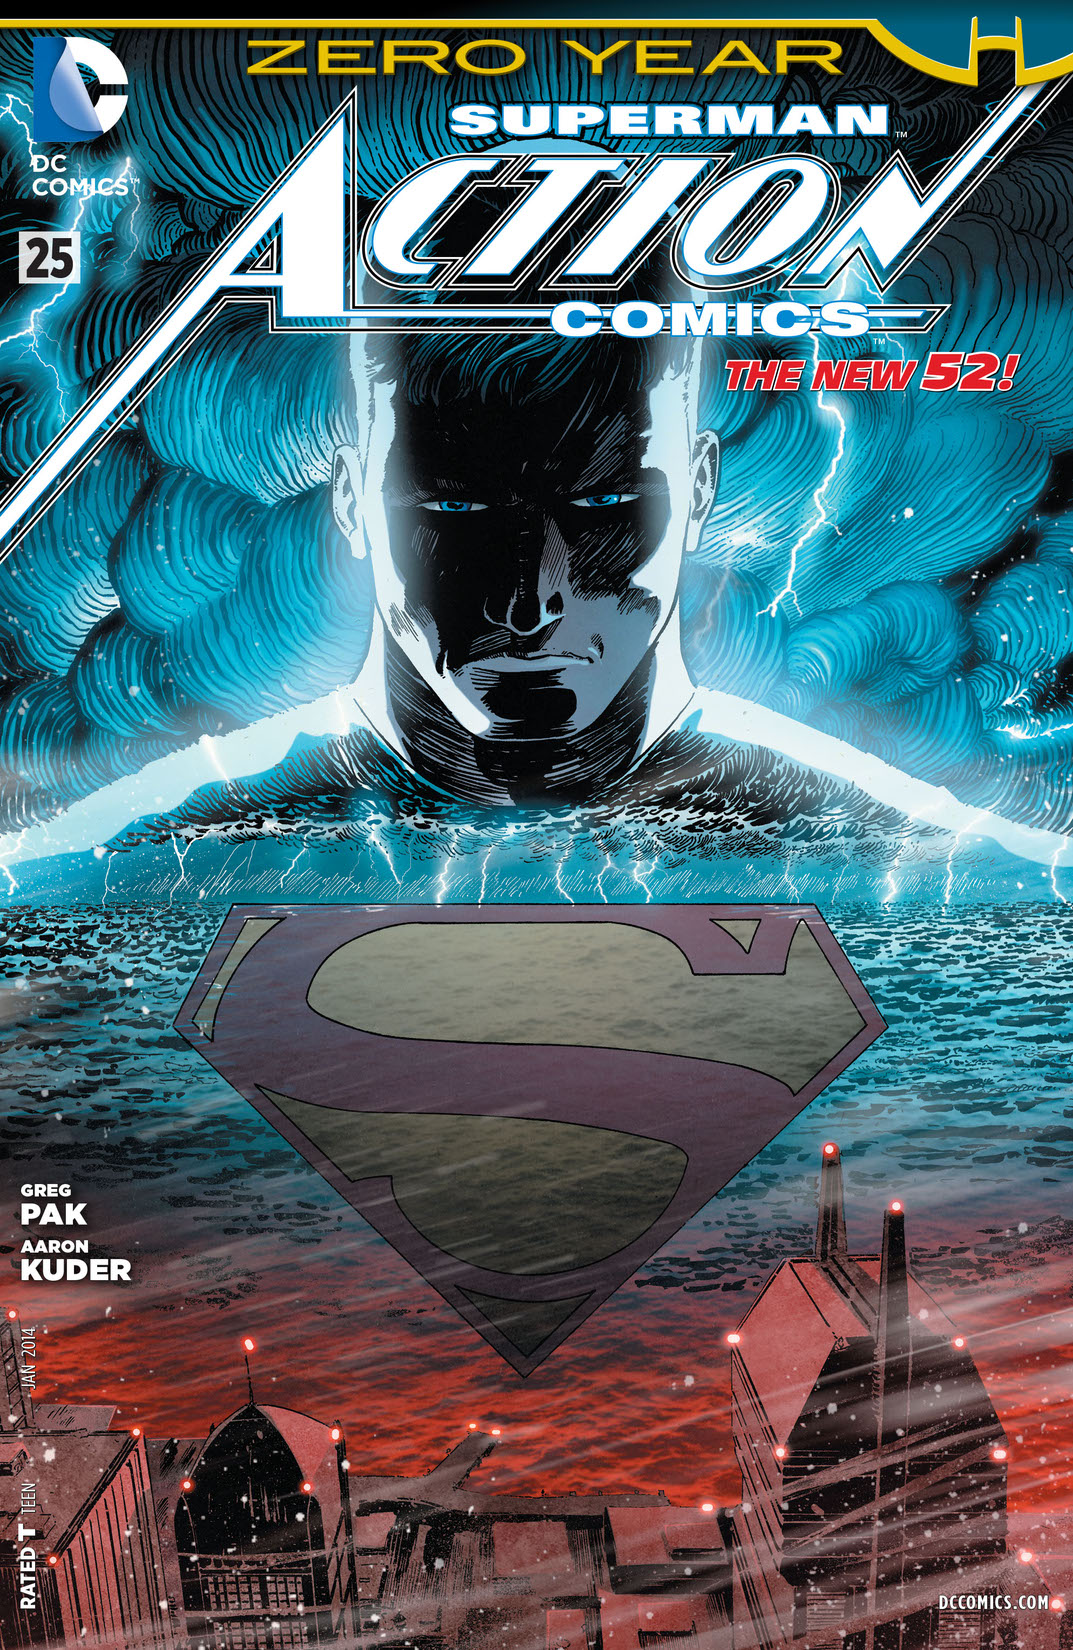 Action Comics (2011-) #25 preview images